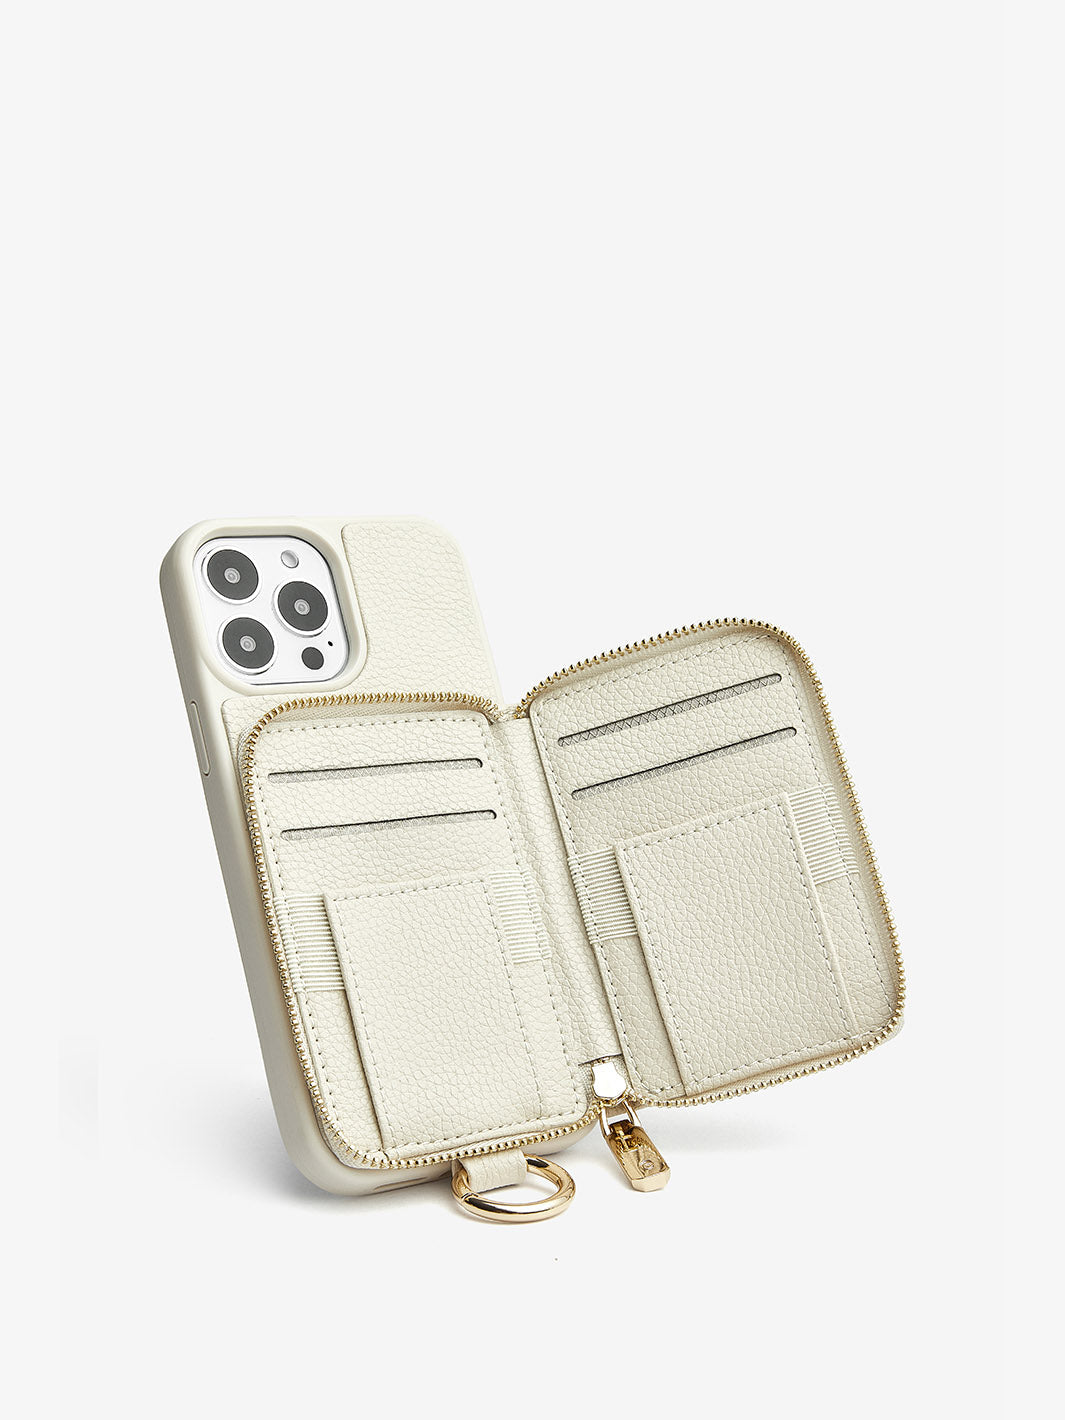 Custype Make Lifestyle-Silk iPhone Wallet Case in beige-2